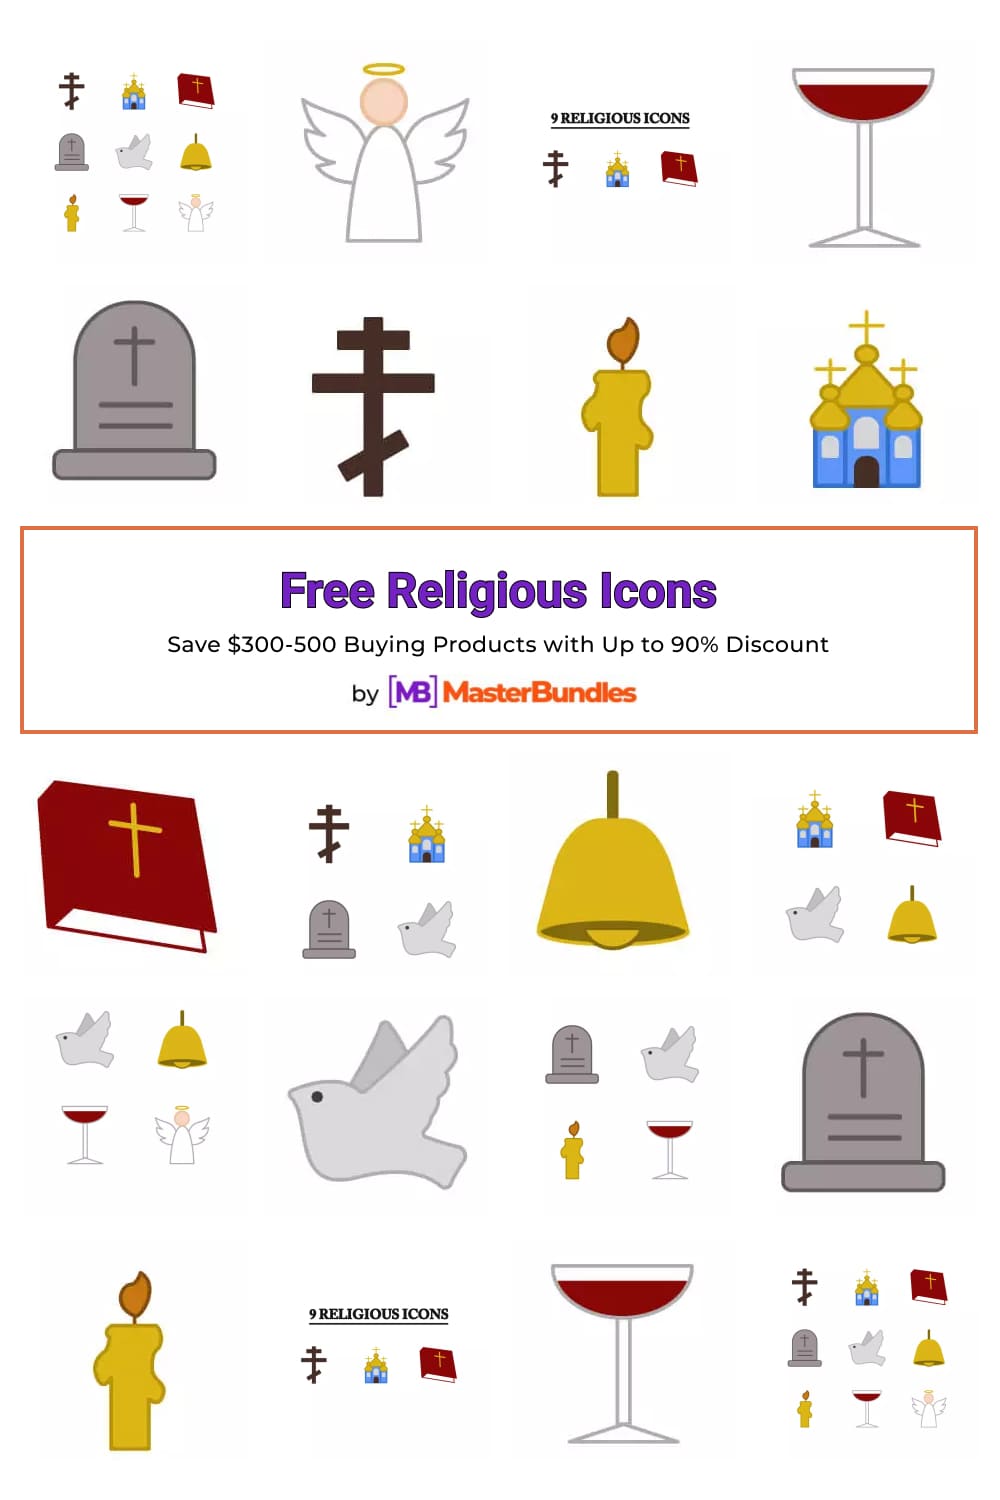 Free Religious Icons Pinterest image.